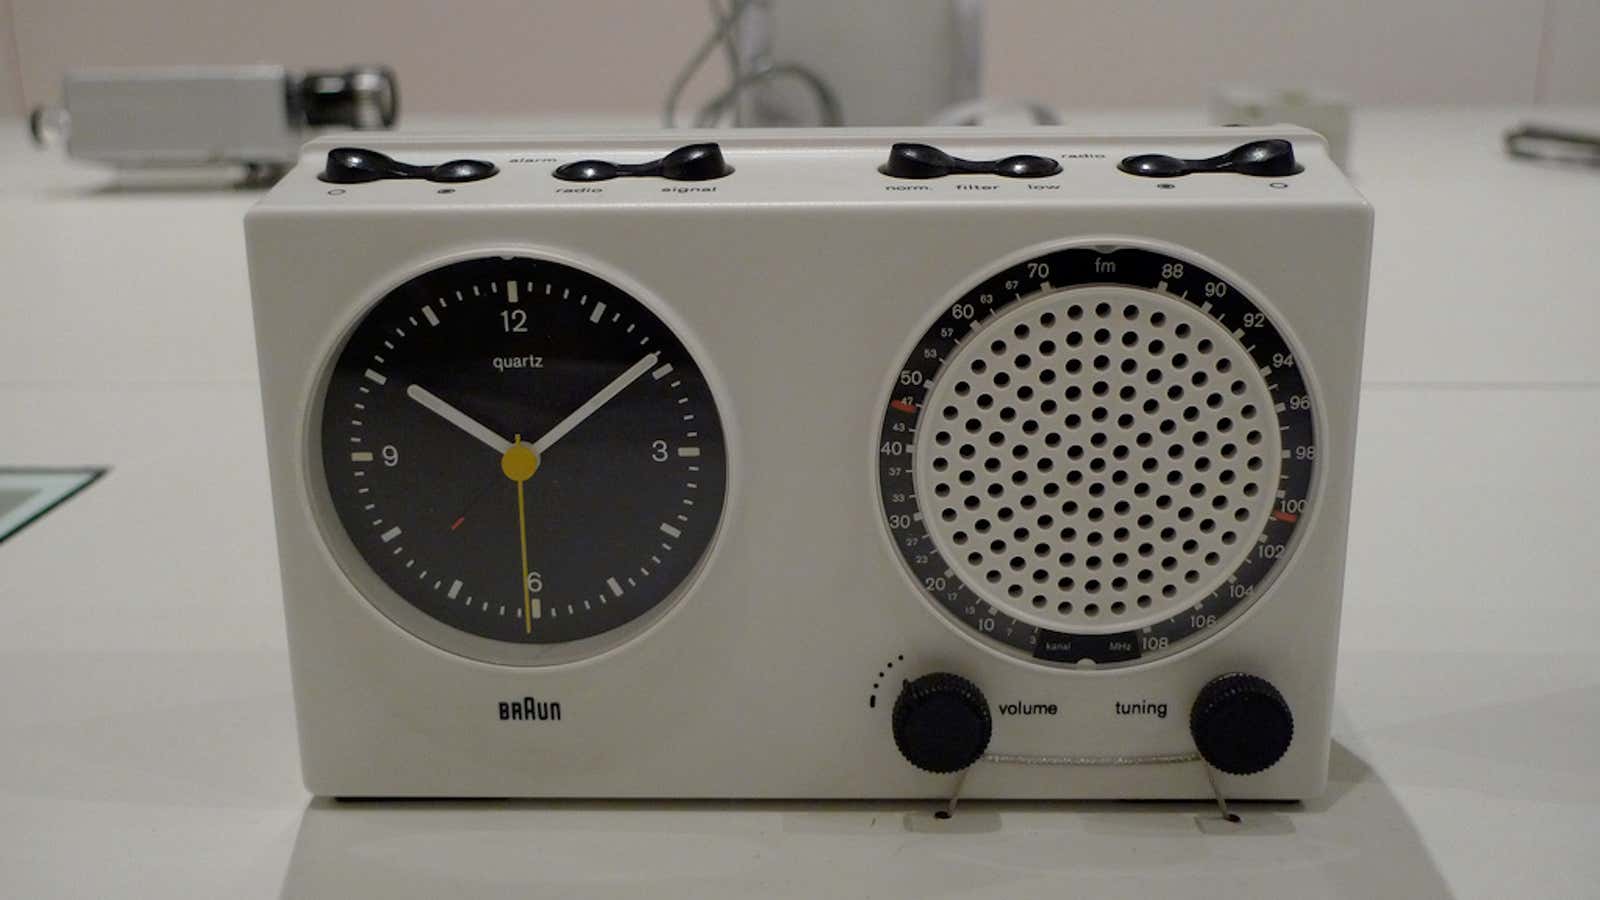 Dieter Rams’ famous alarm clock speaks to his sleek, minimalist style.